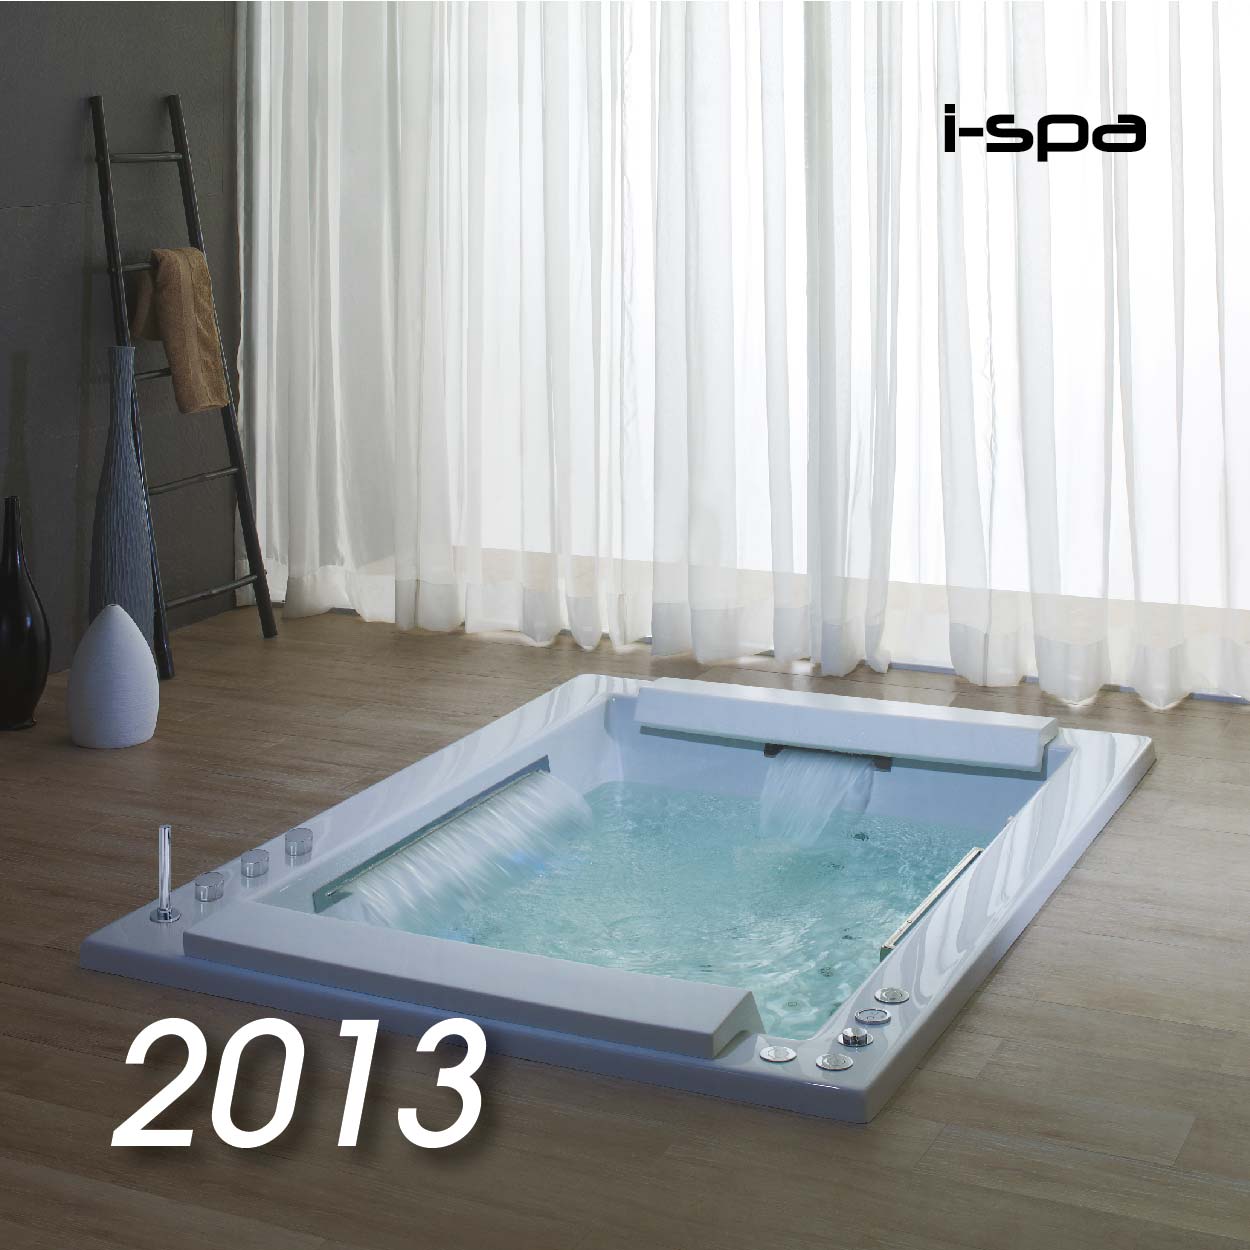 i-SPA Innovative Bathroom Product Award 2013